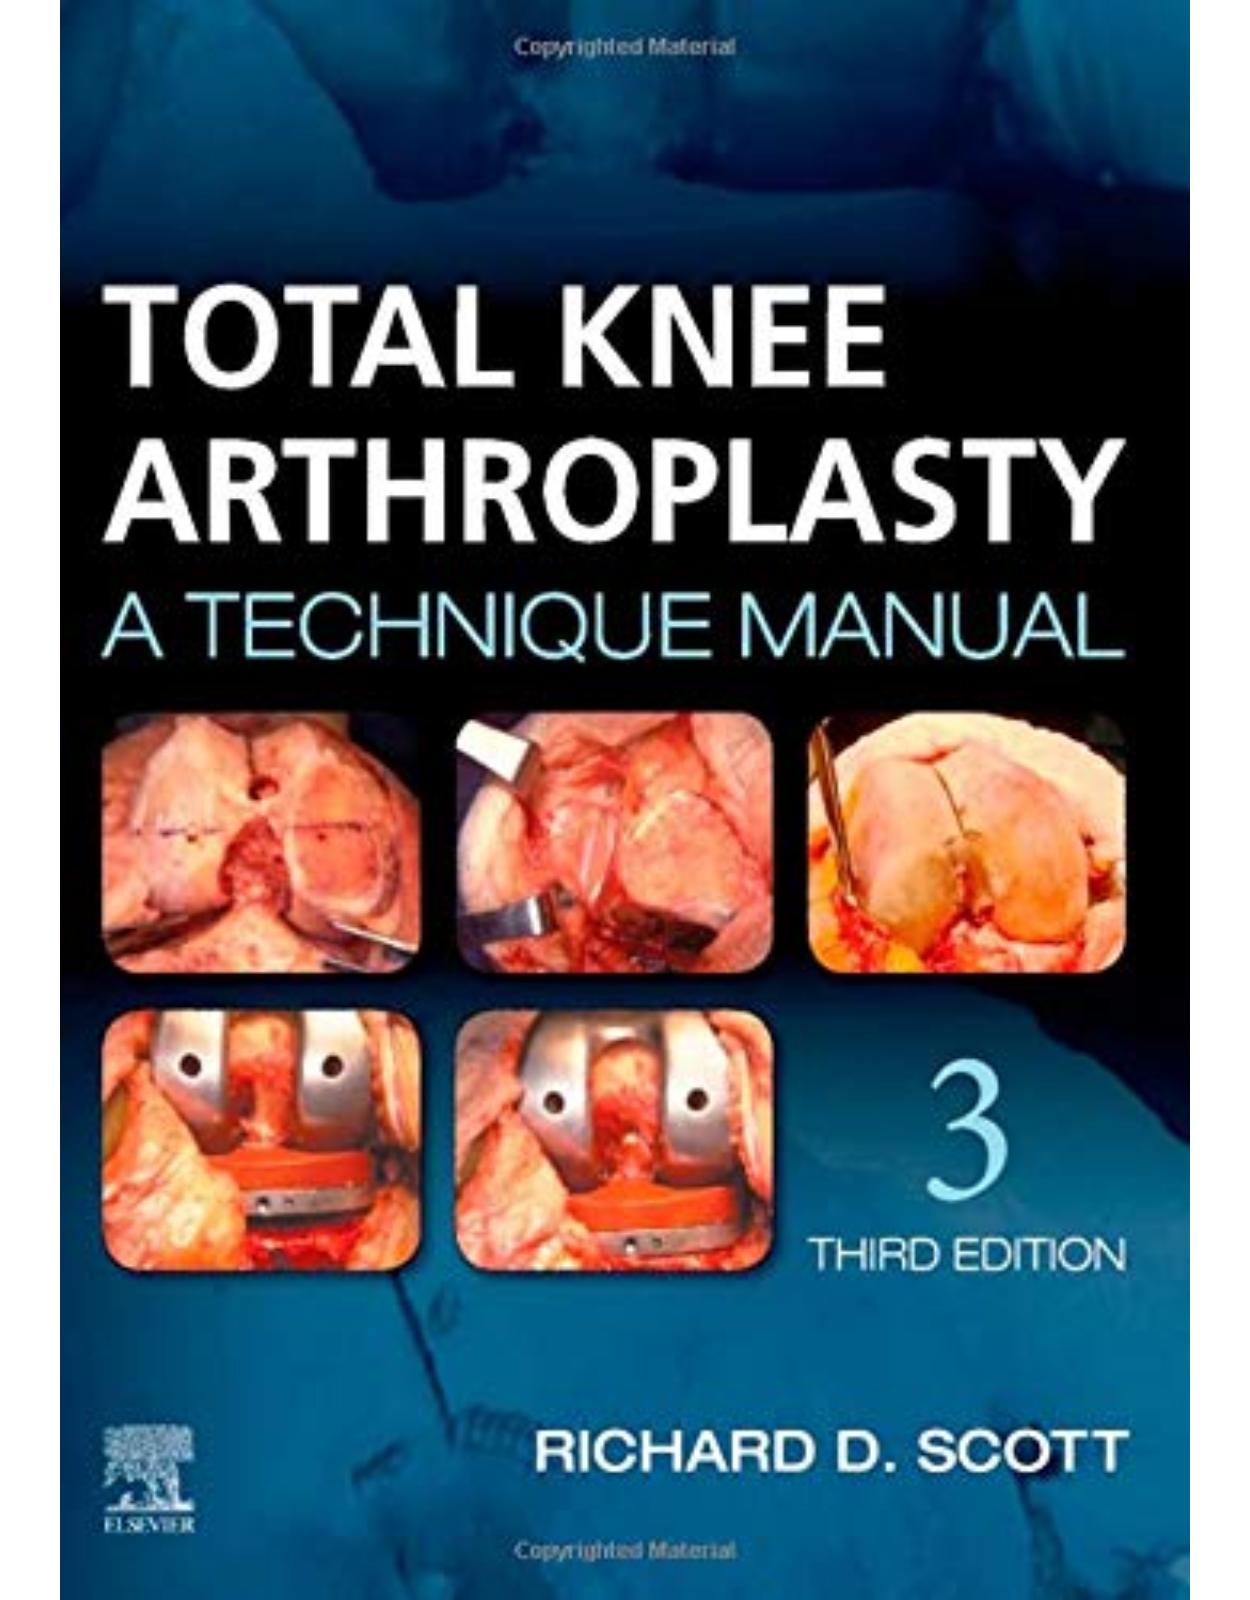 Total Knee Arthroplasty, 3rd Edition